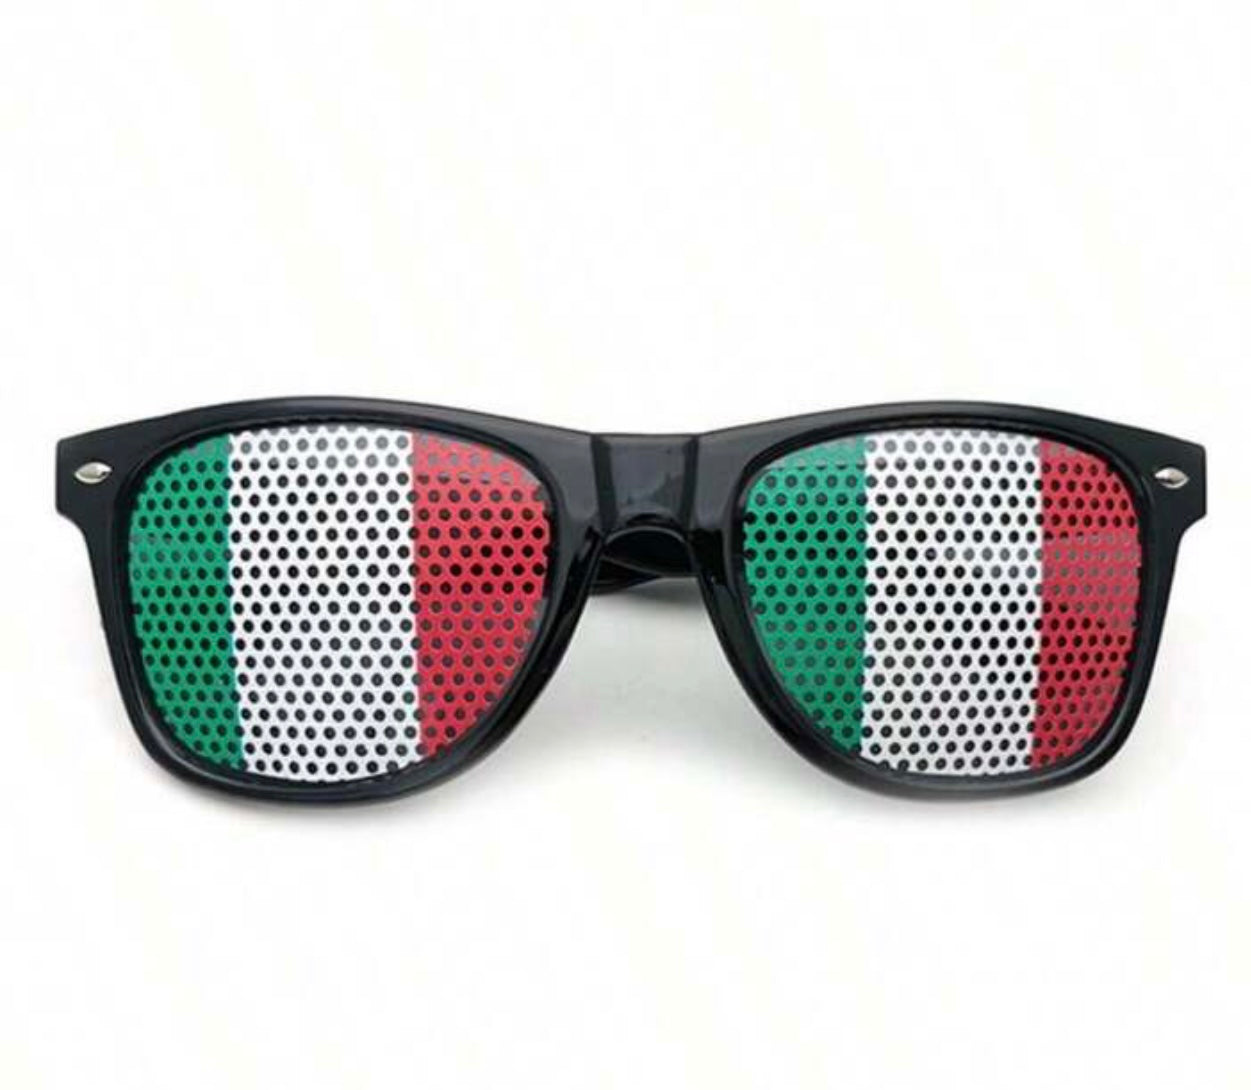 1 Italy Sunglasses - Italy Flag Sunglasses